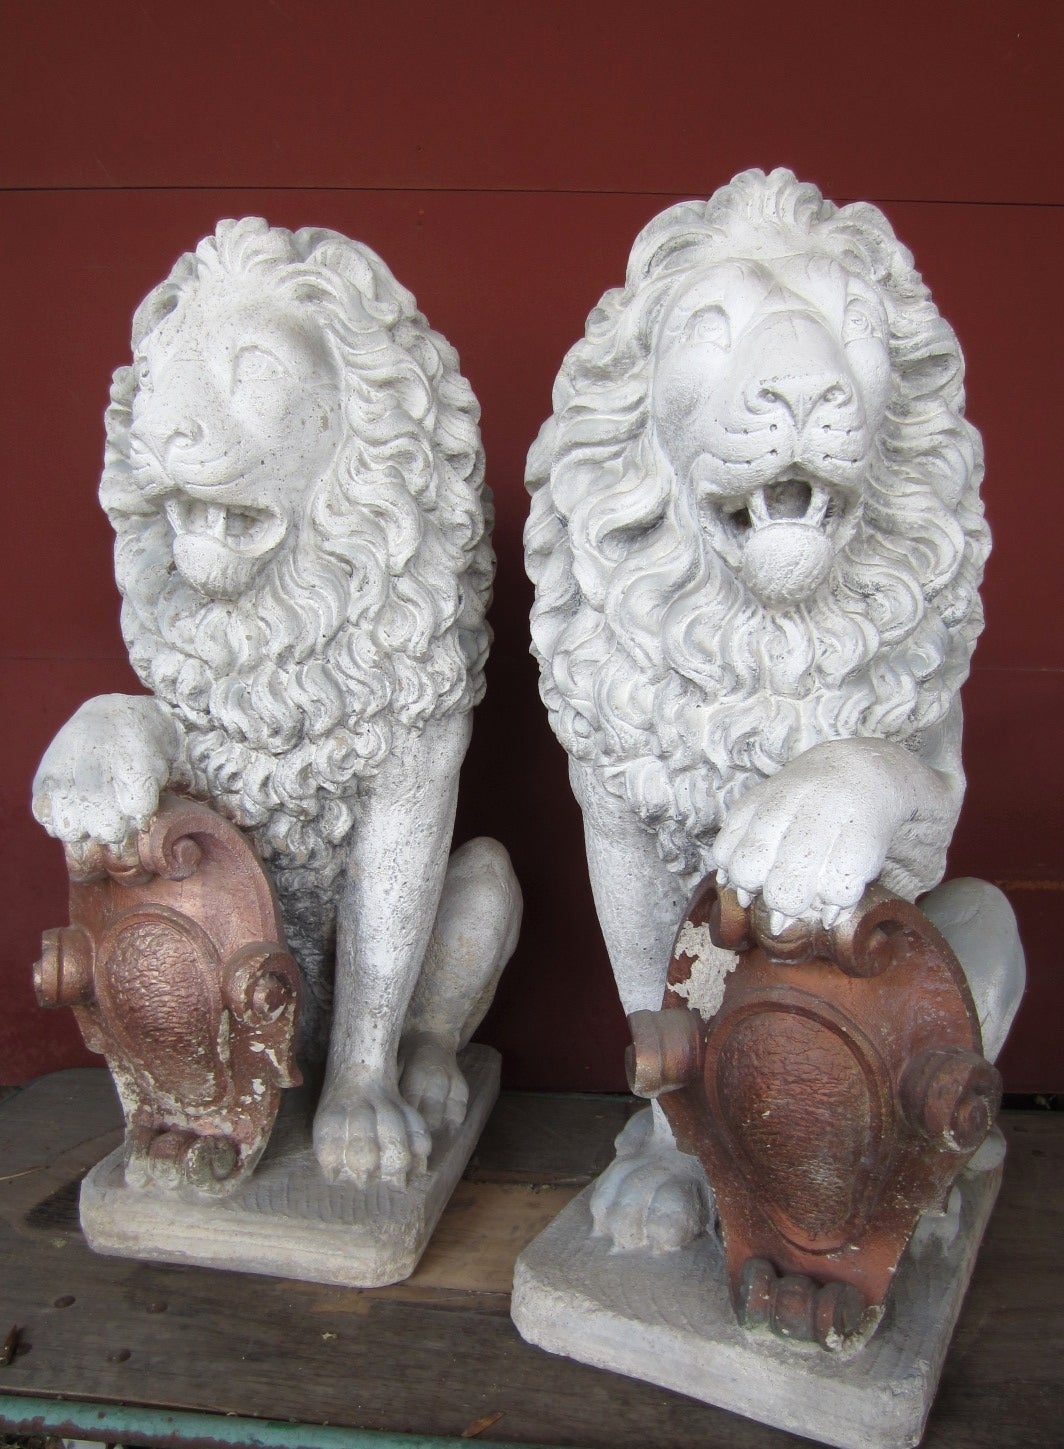 Late Victorian Antique Architectural Regal Lion Sentinels Gate Guards